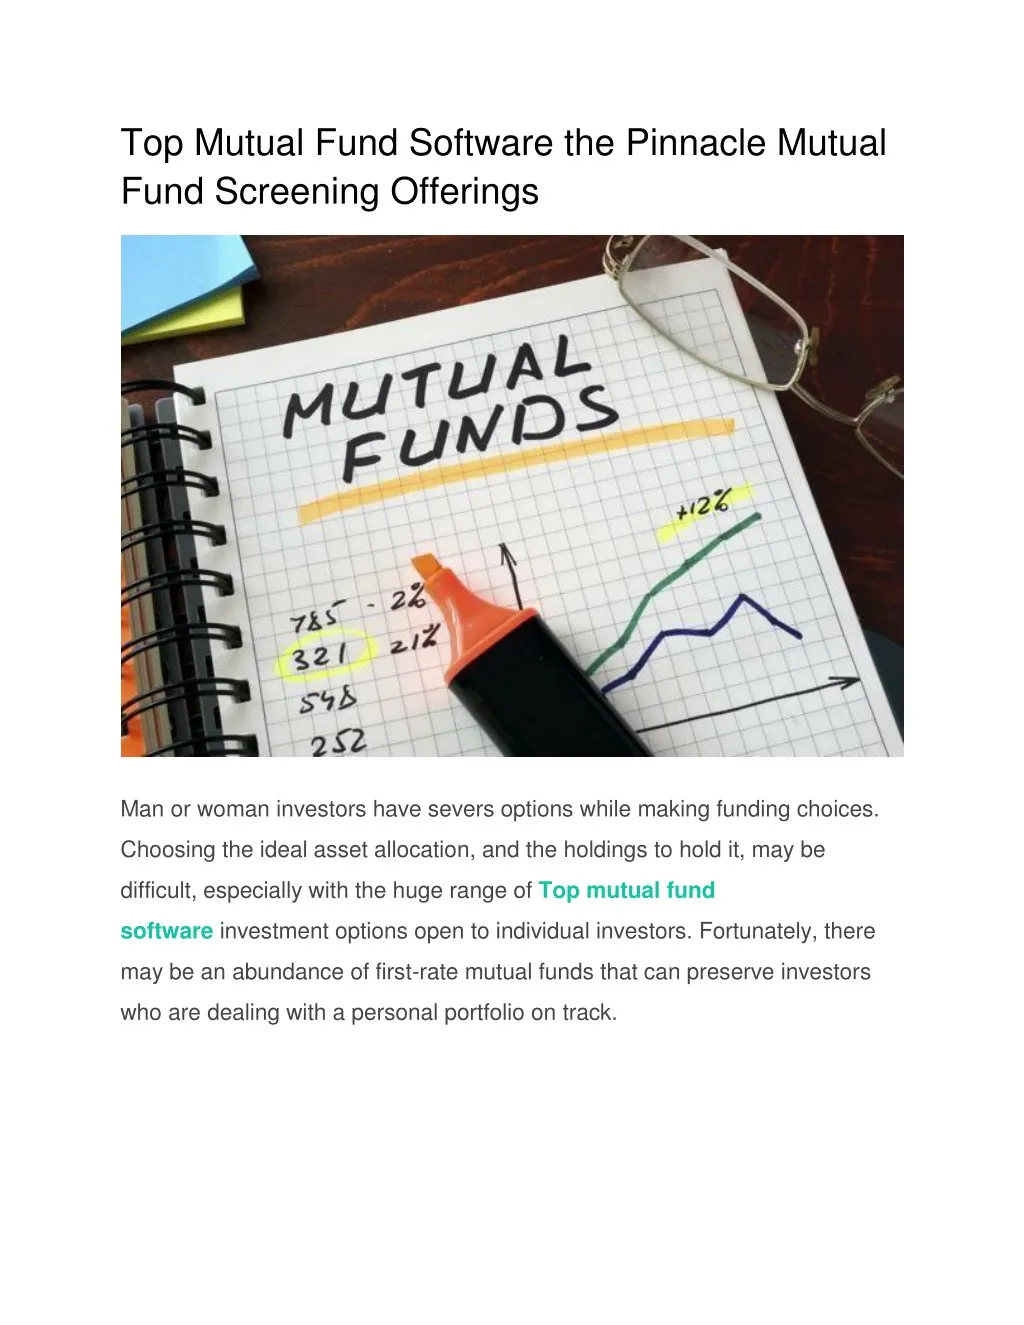 top mutual fund software the pinnacle mutual fund